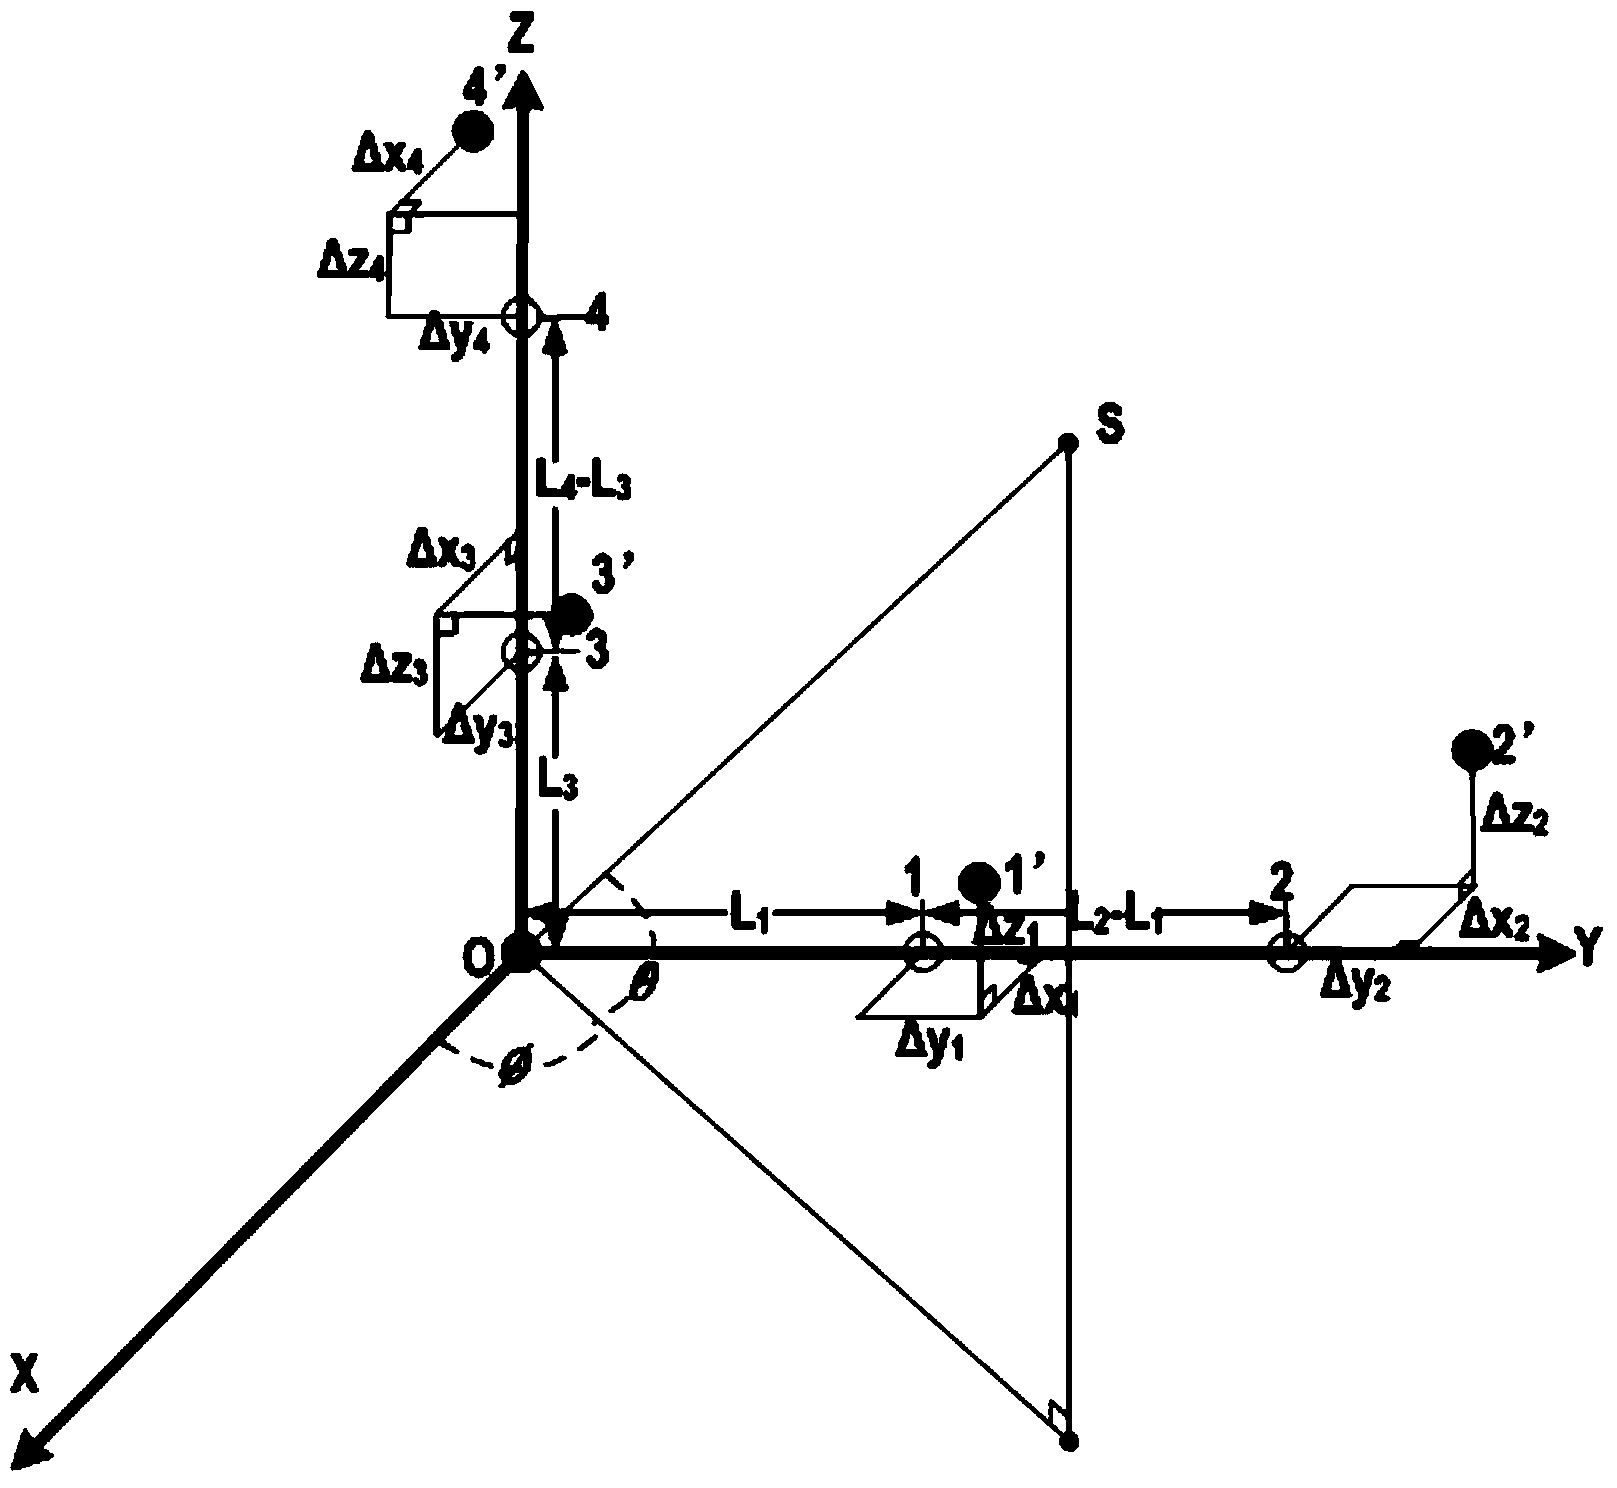 Interferometer array integrated correction method